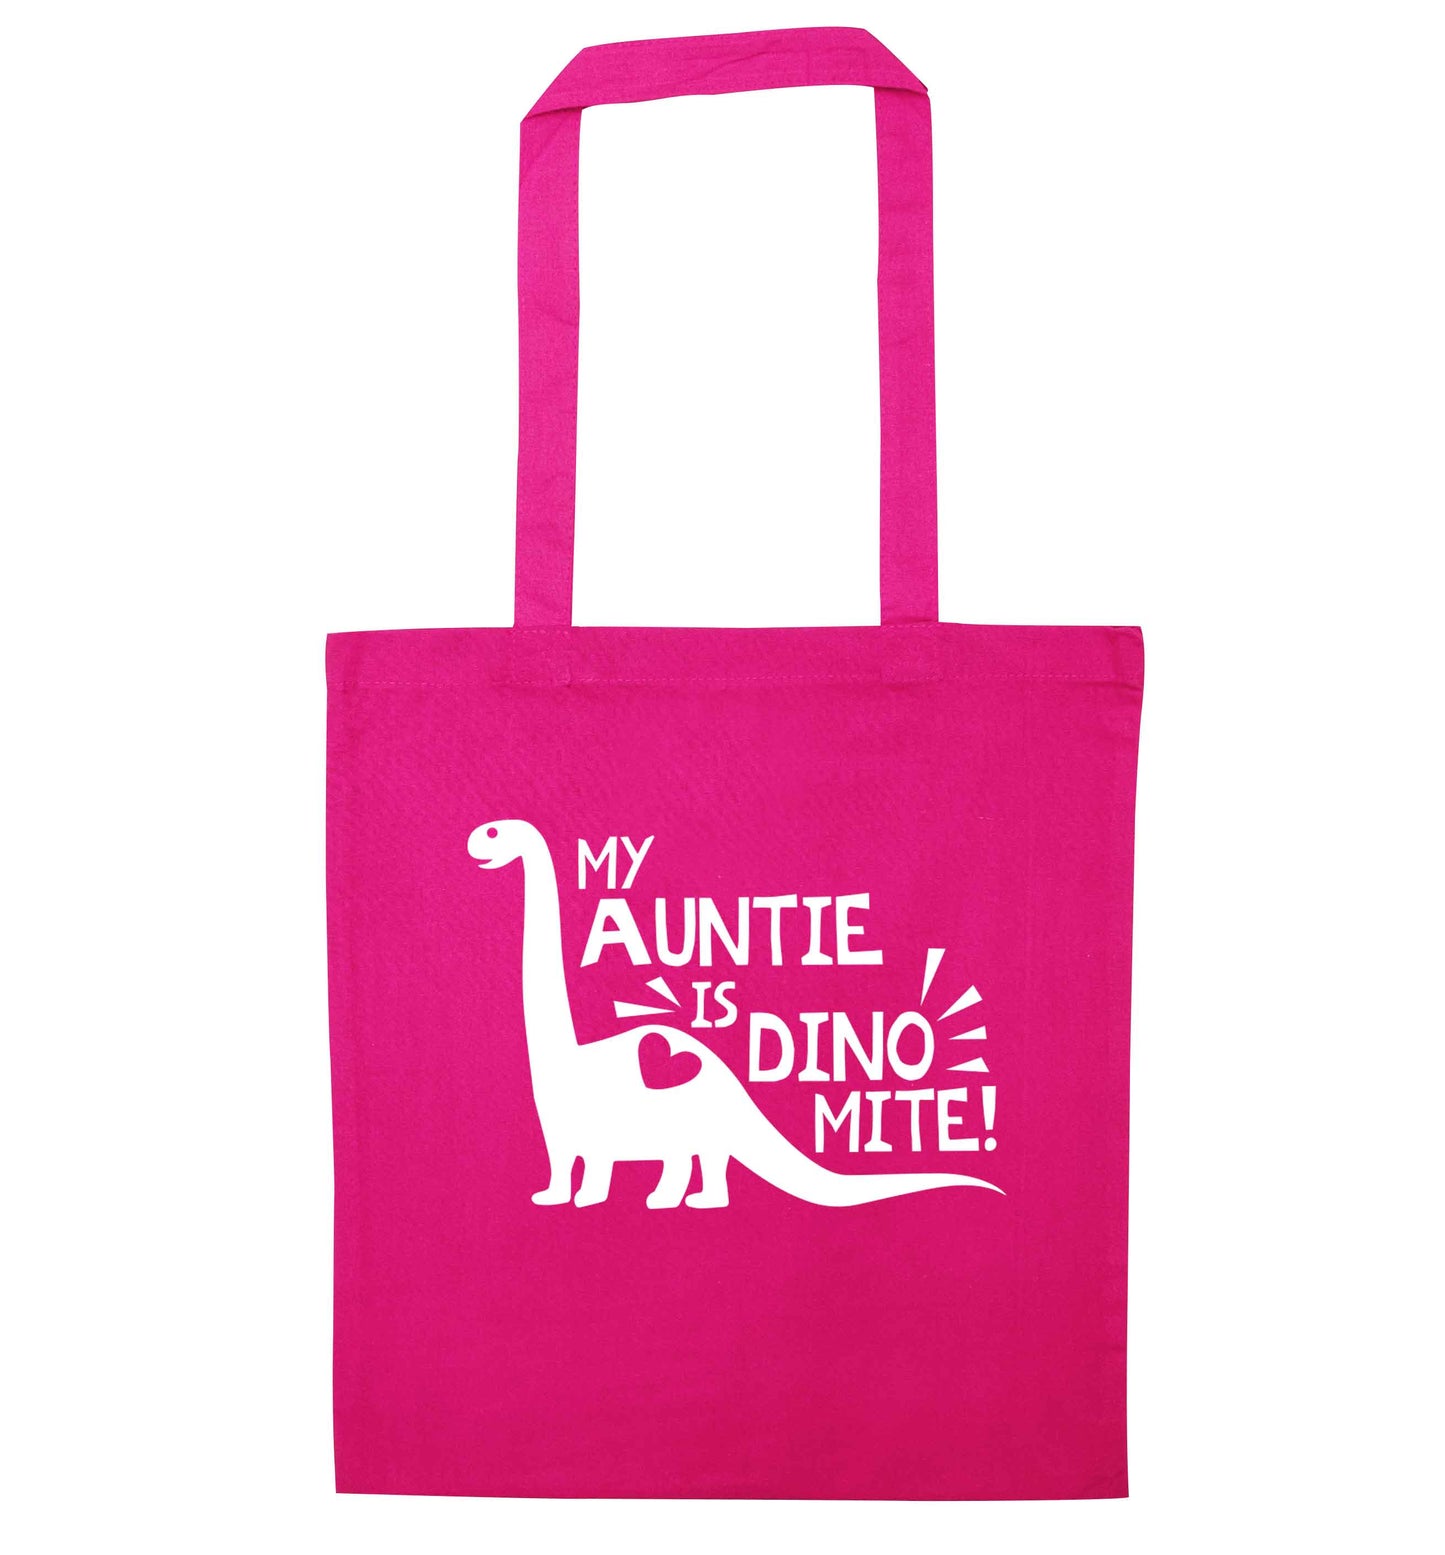 My auntie is dinomite! pink tote bag